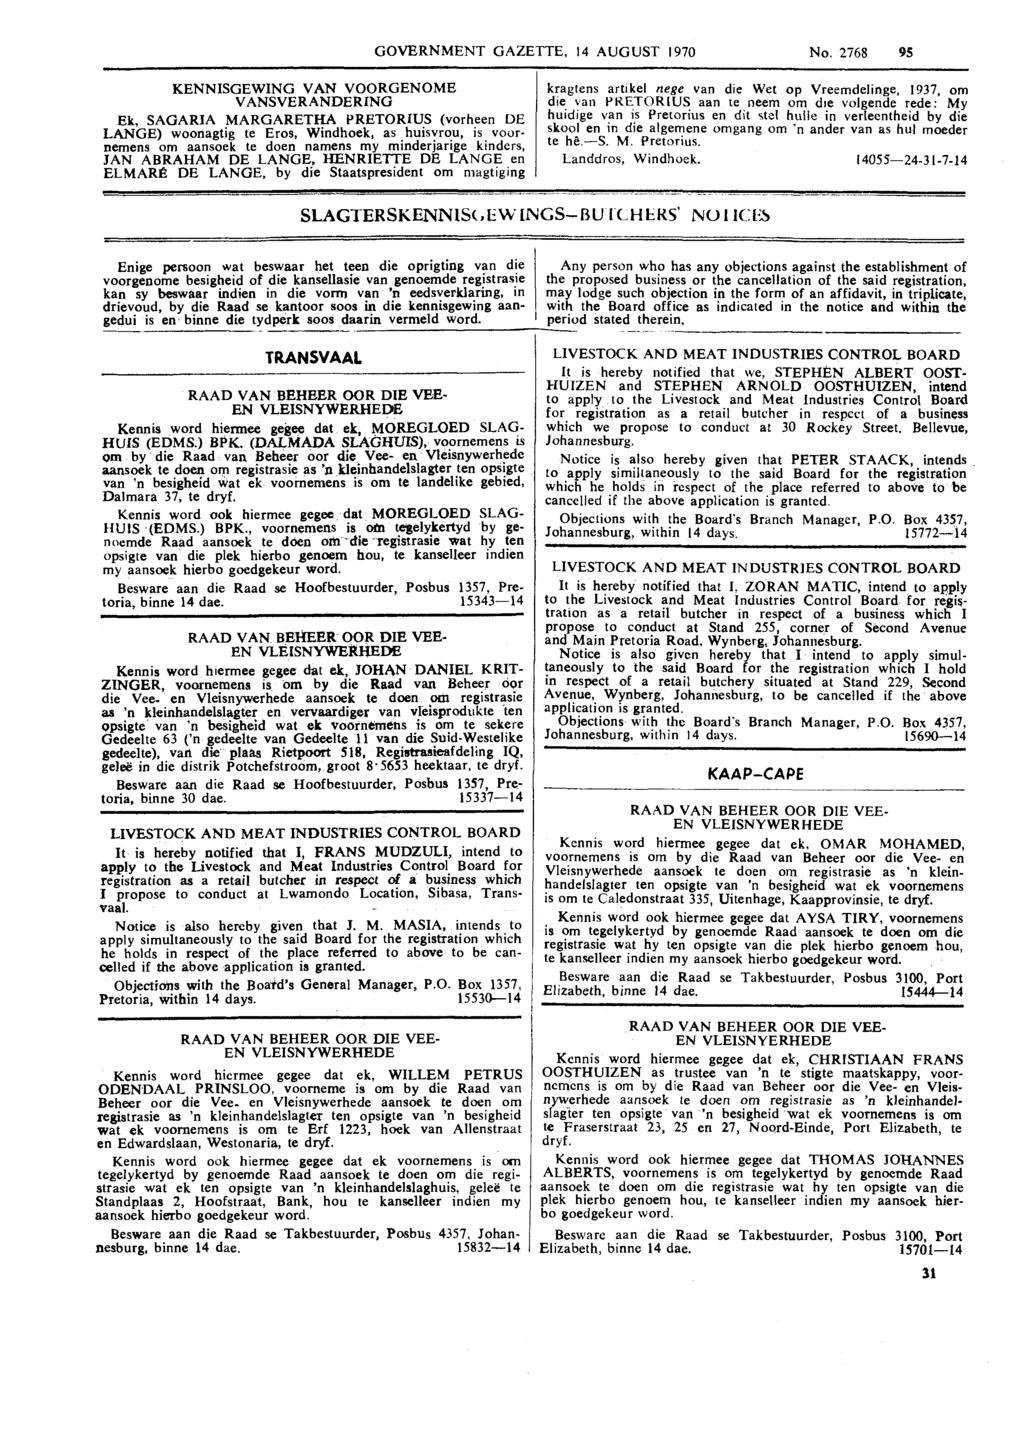 GOVERNMENT GAZETTE, 14 AUGUST 1970 No. 2568 95 KENNISGEWING VAN VOORGENOME VANSVERANDERING Ek, SAGARIA MARGARET?